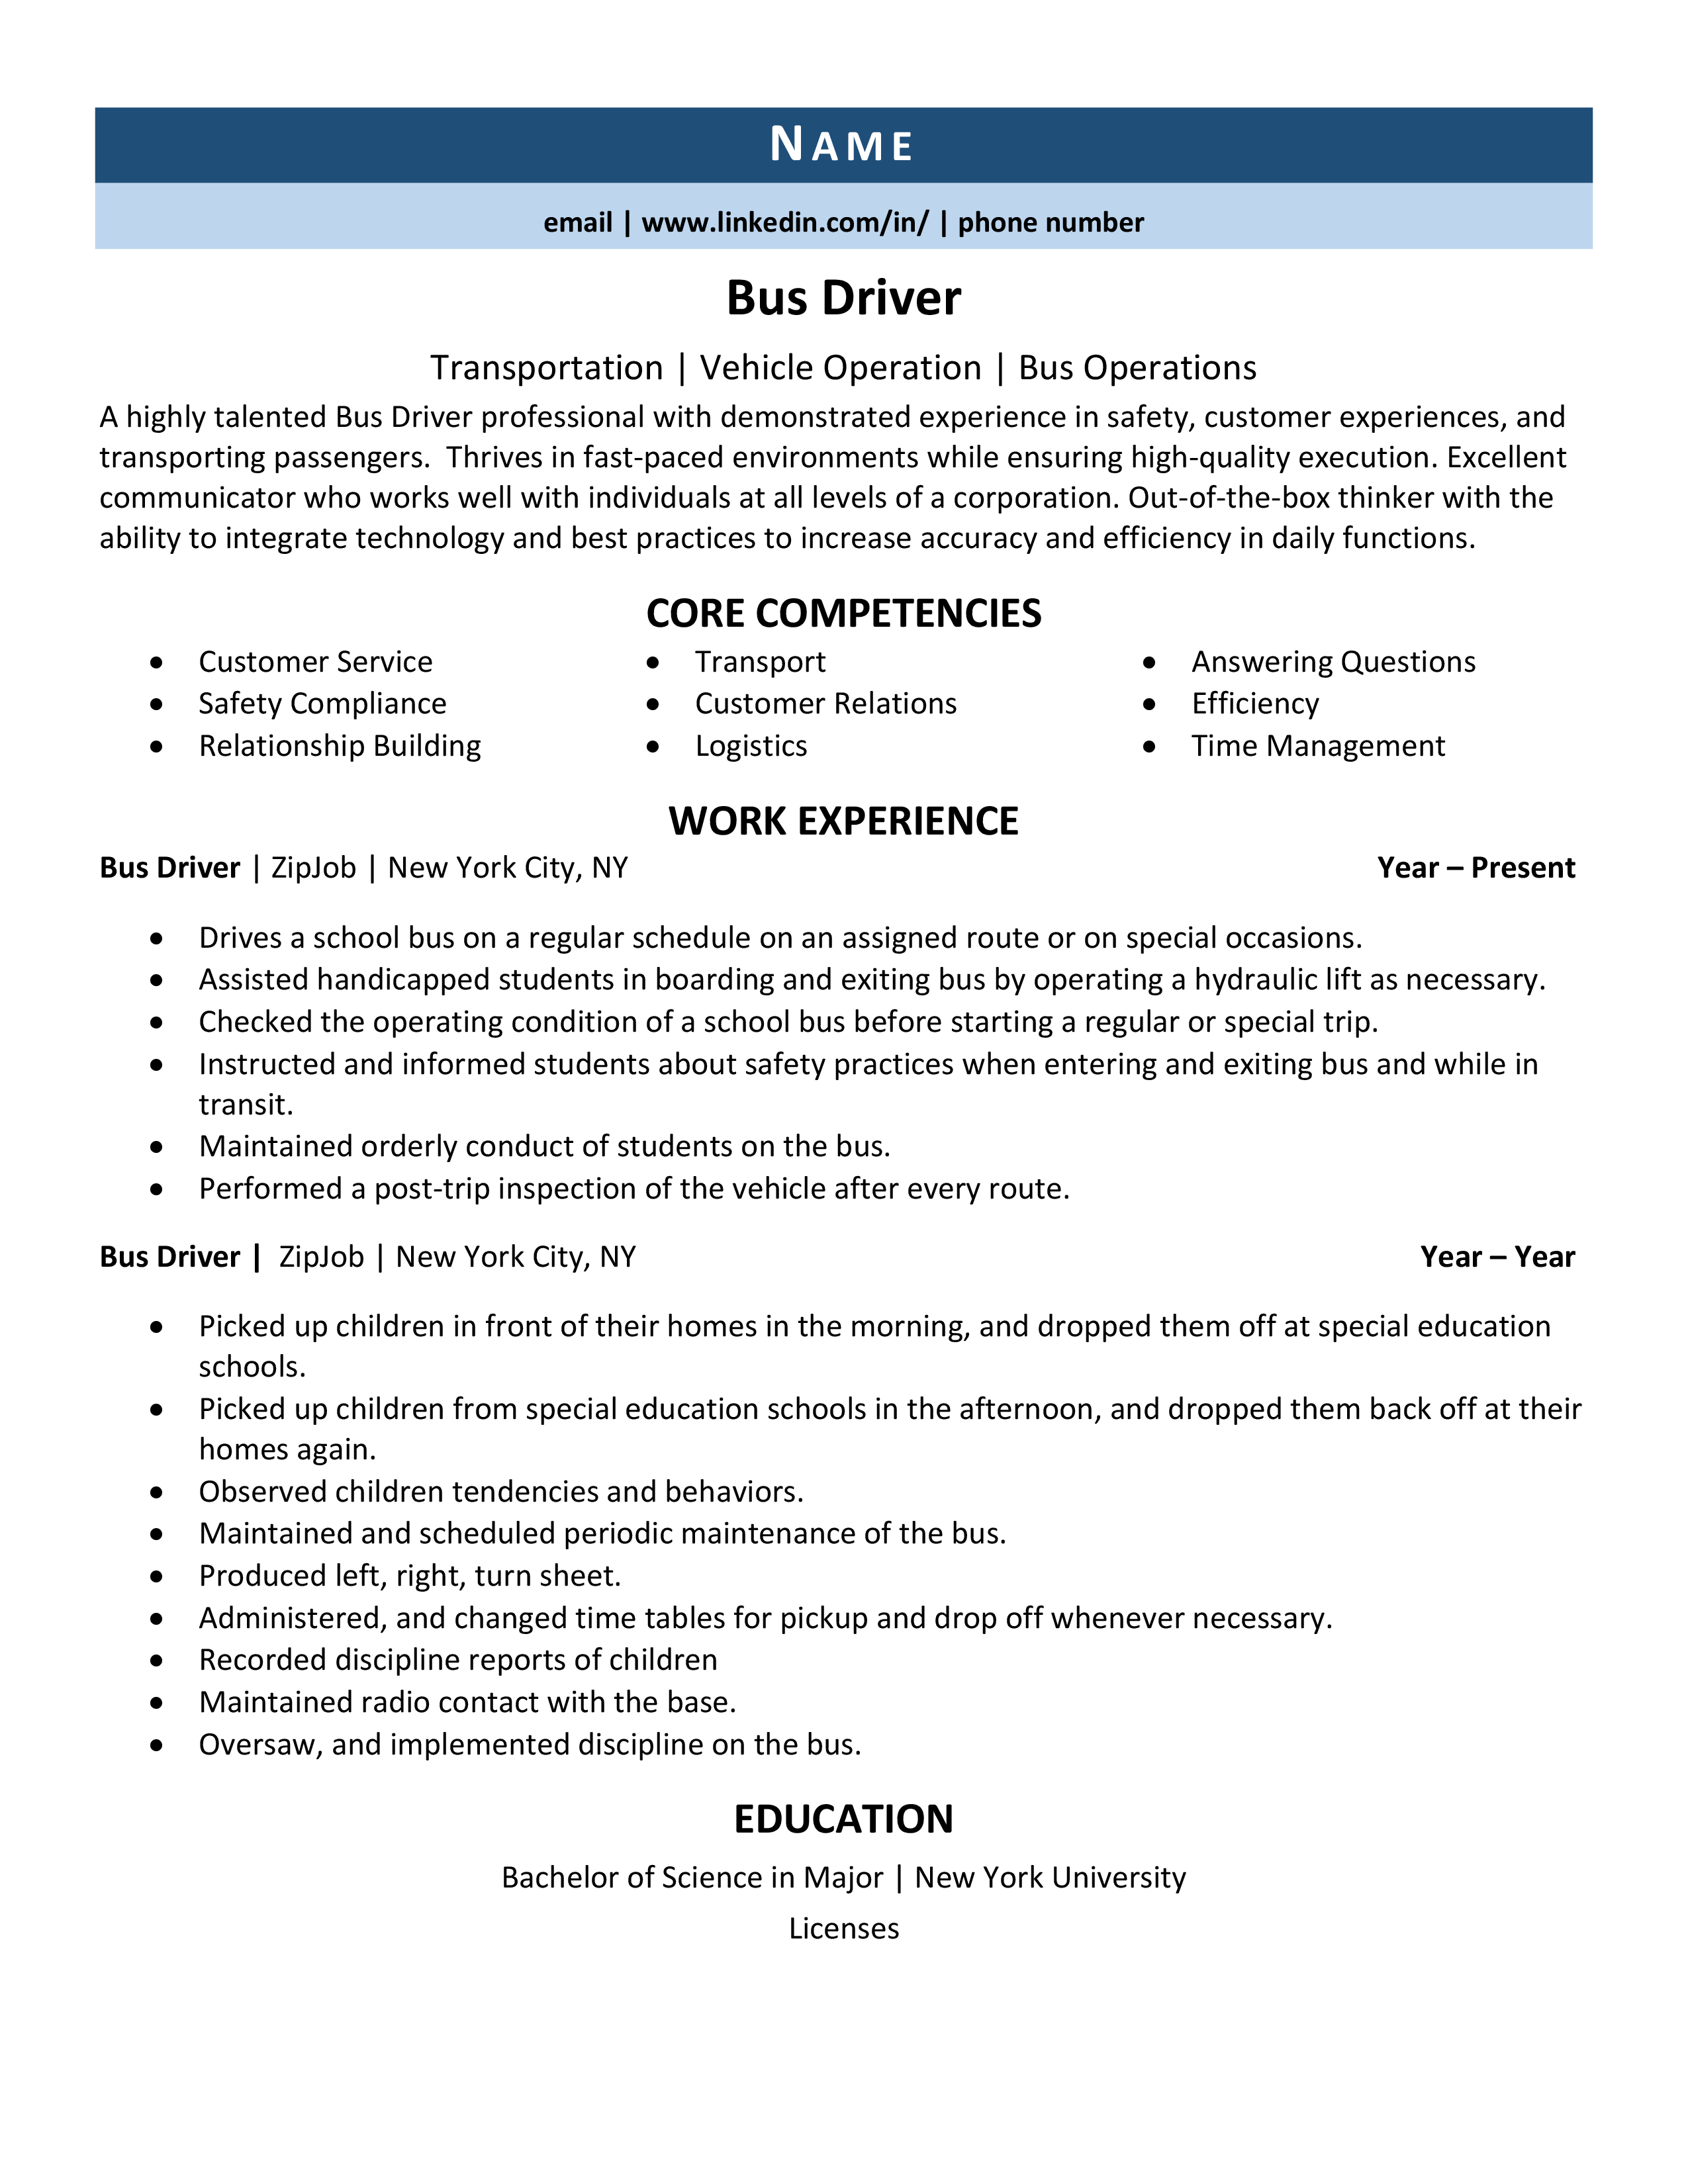 Sample Resume For Bus Driver - Susamiakanea